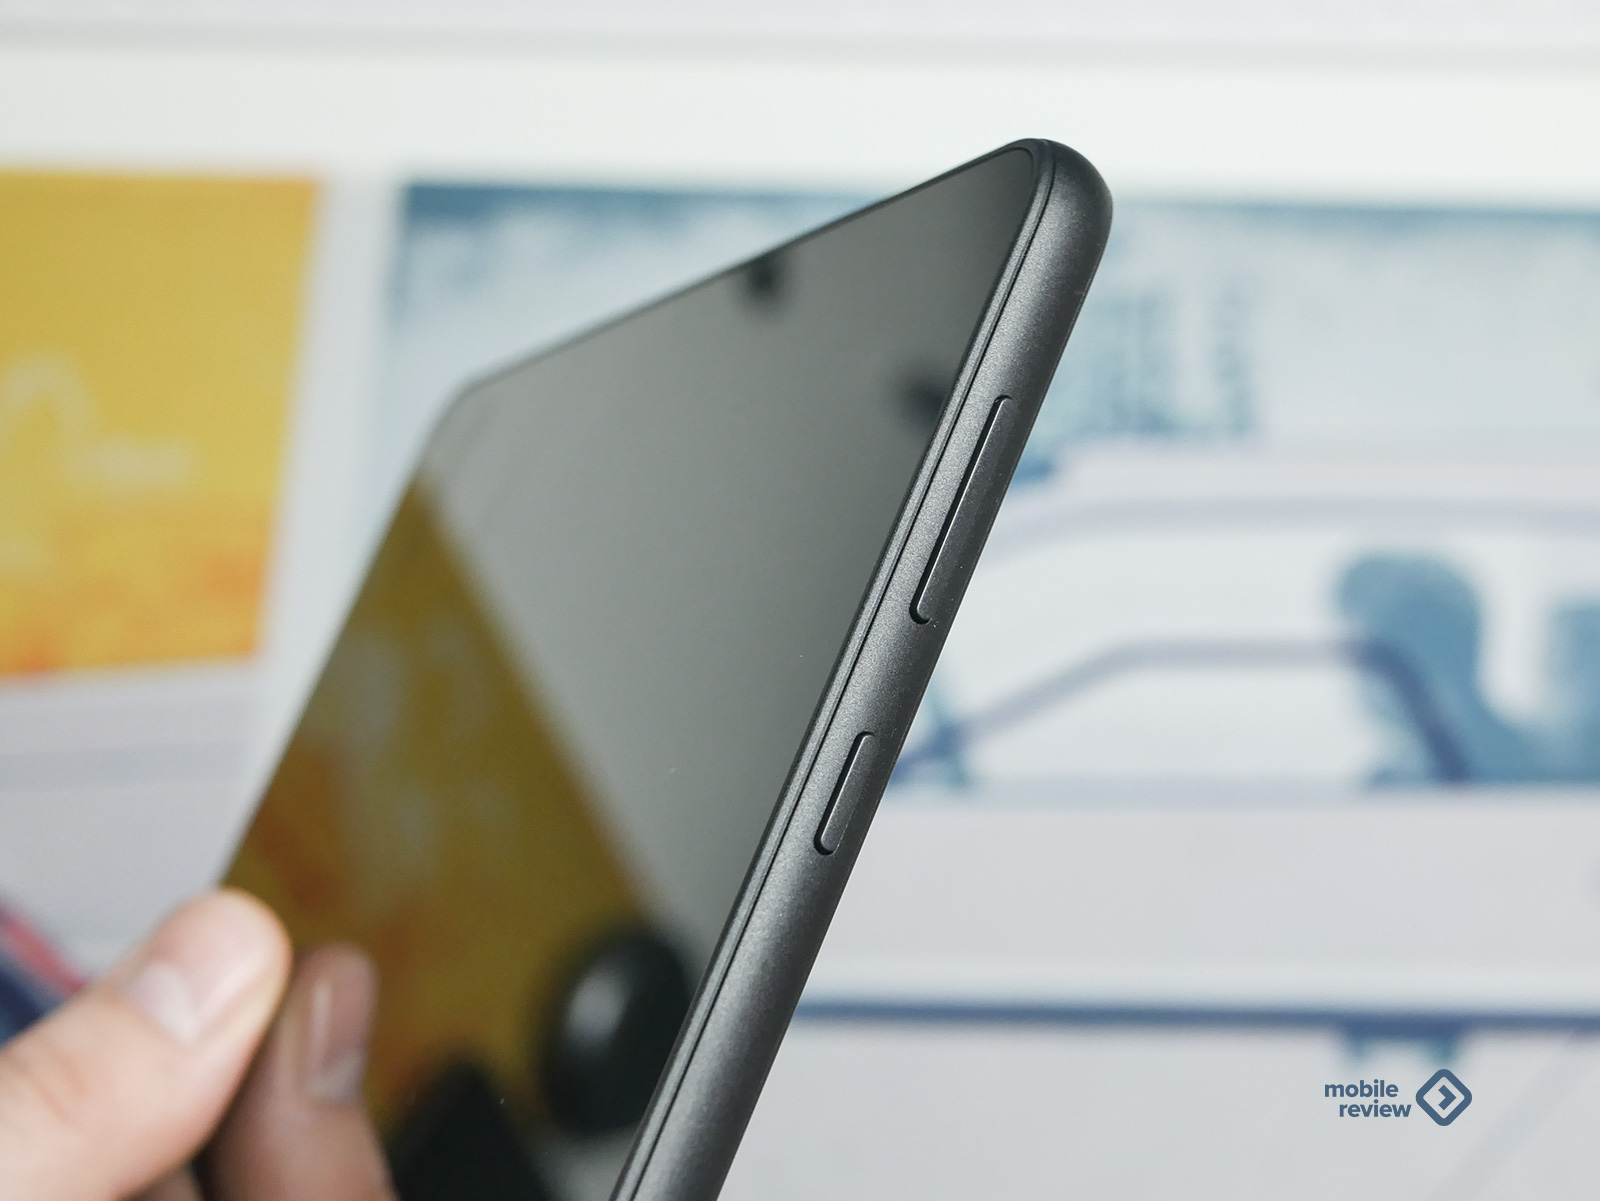 Обзор планшета Huawei MatePad SE